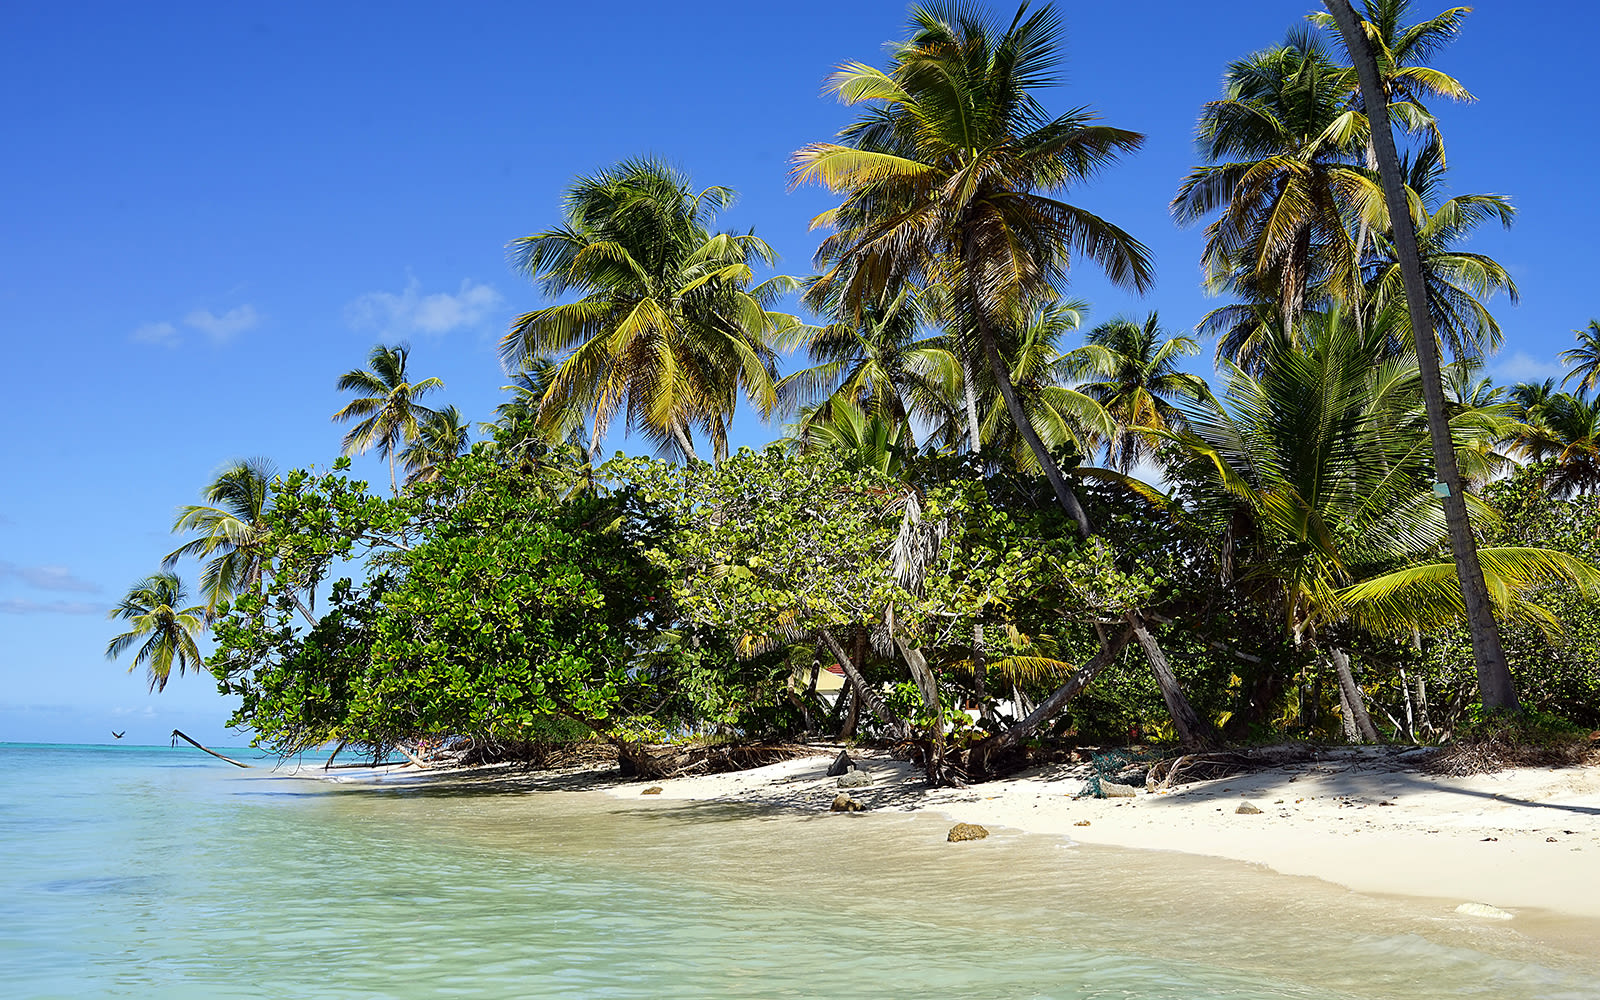 A Caribbean beach with palm trees